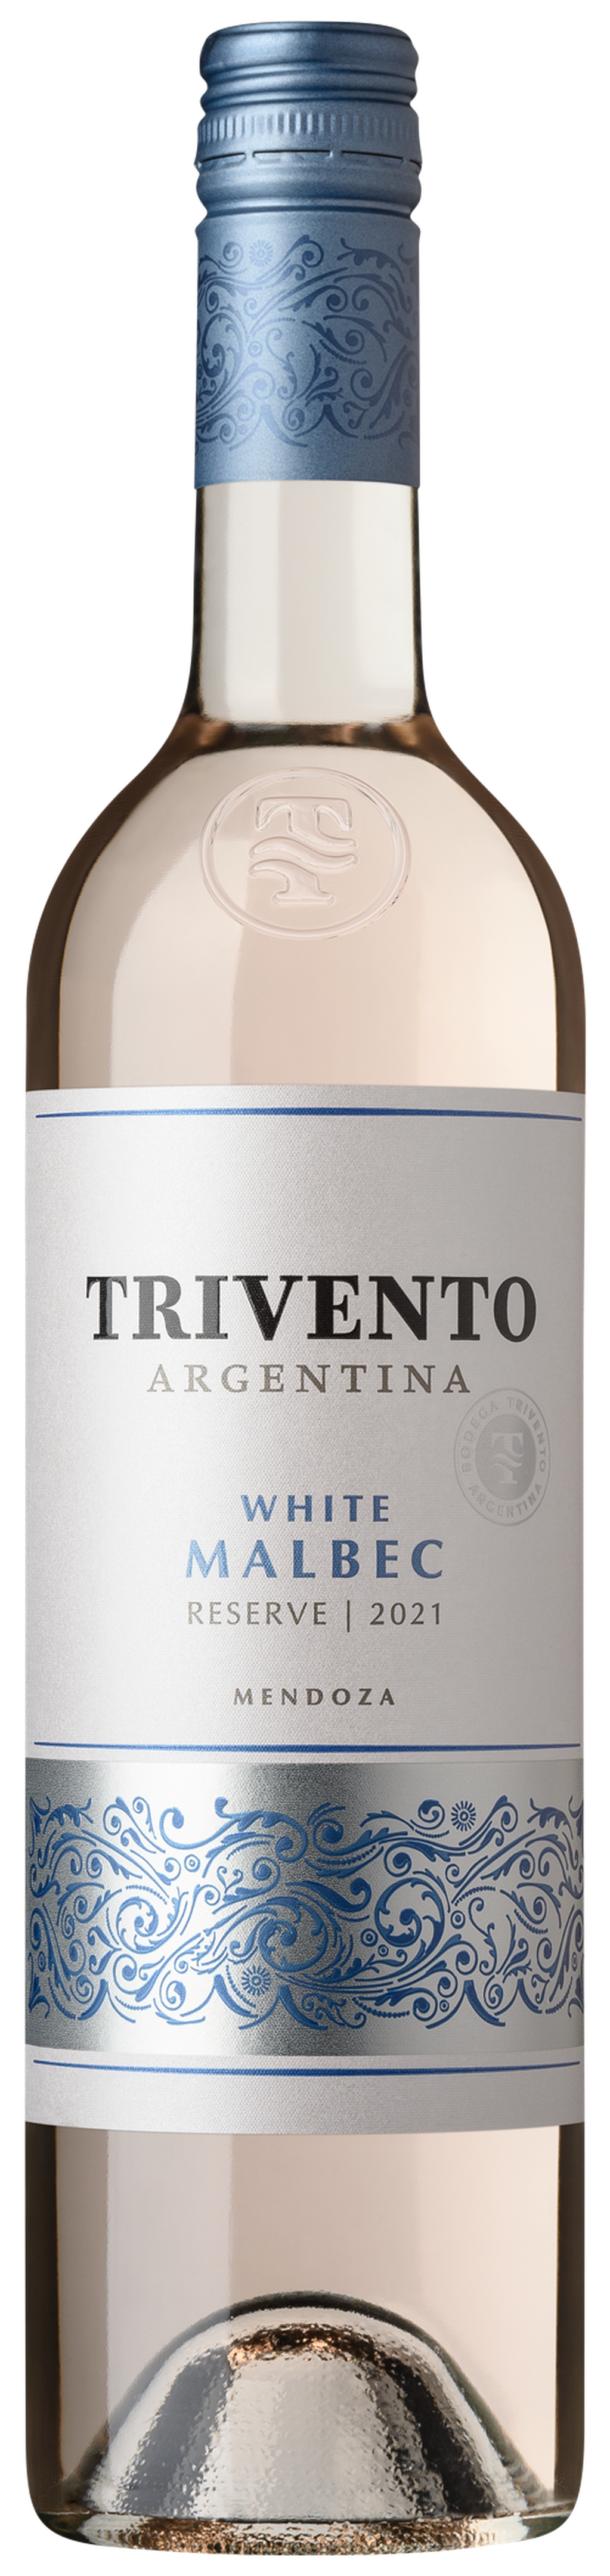 White Malbec de Trivento.